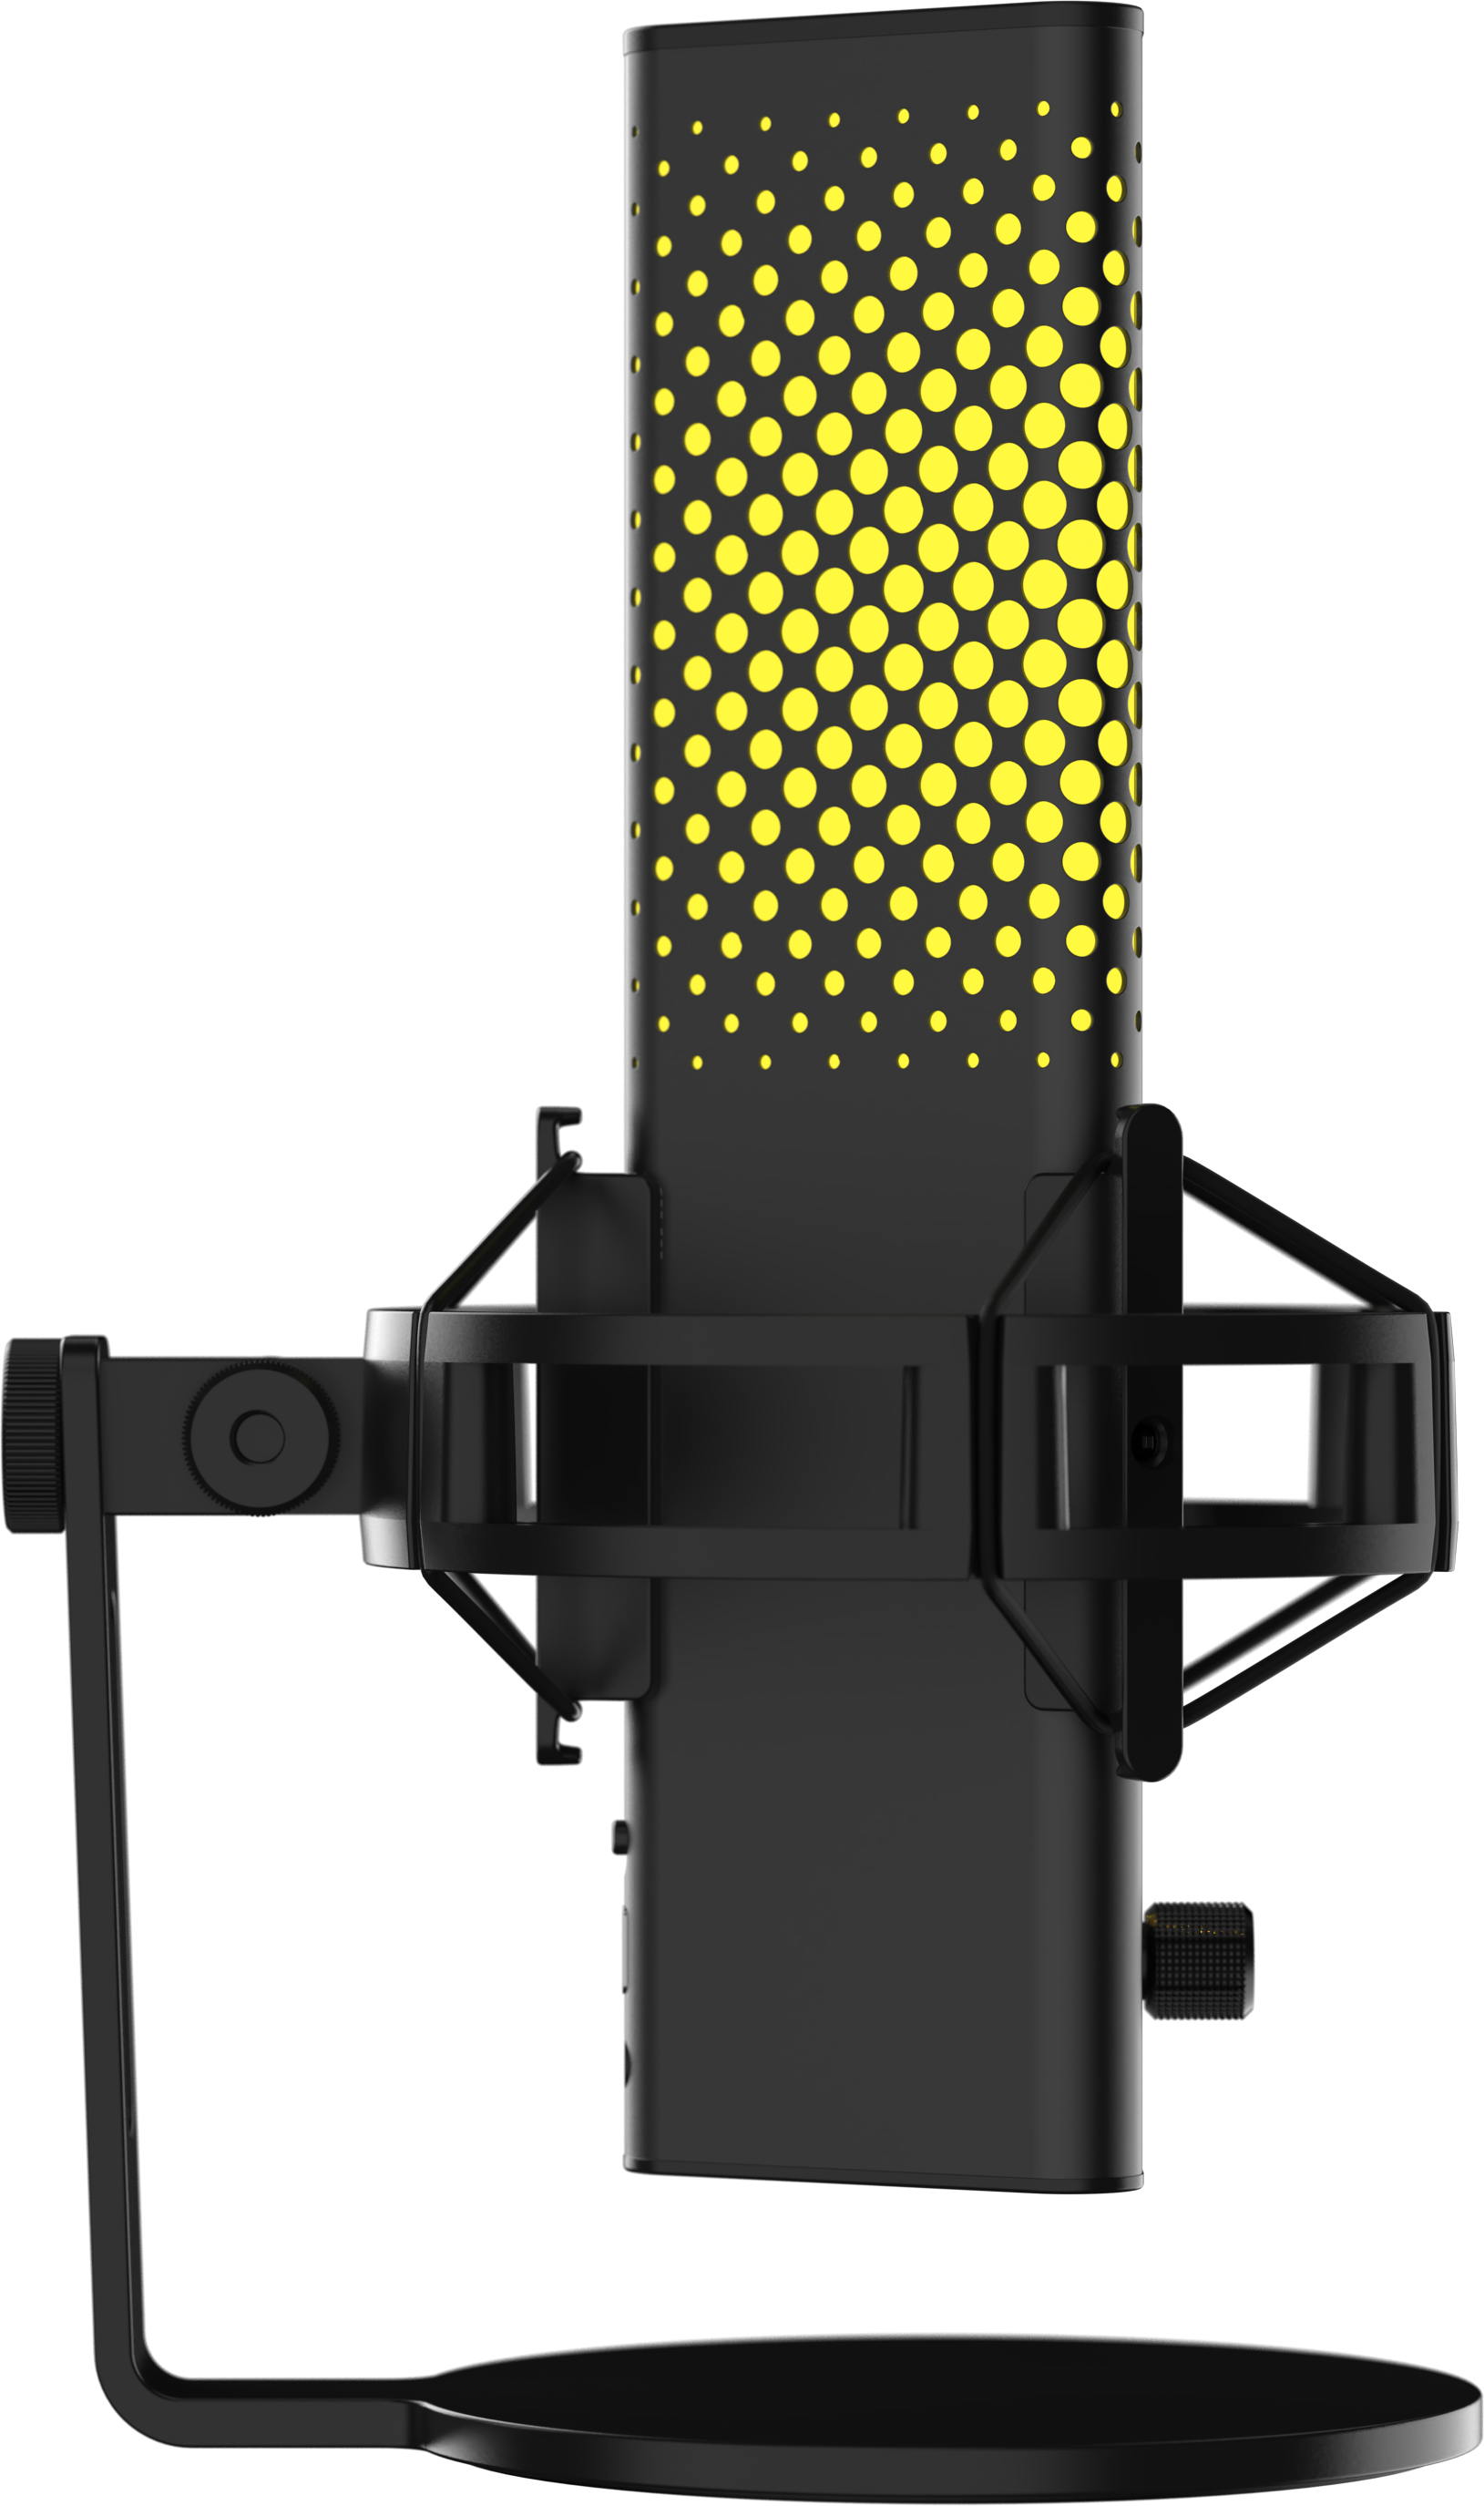 Endgame Gear Xstrm Microphone - Svart